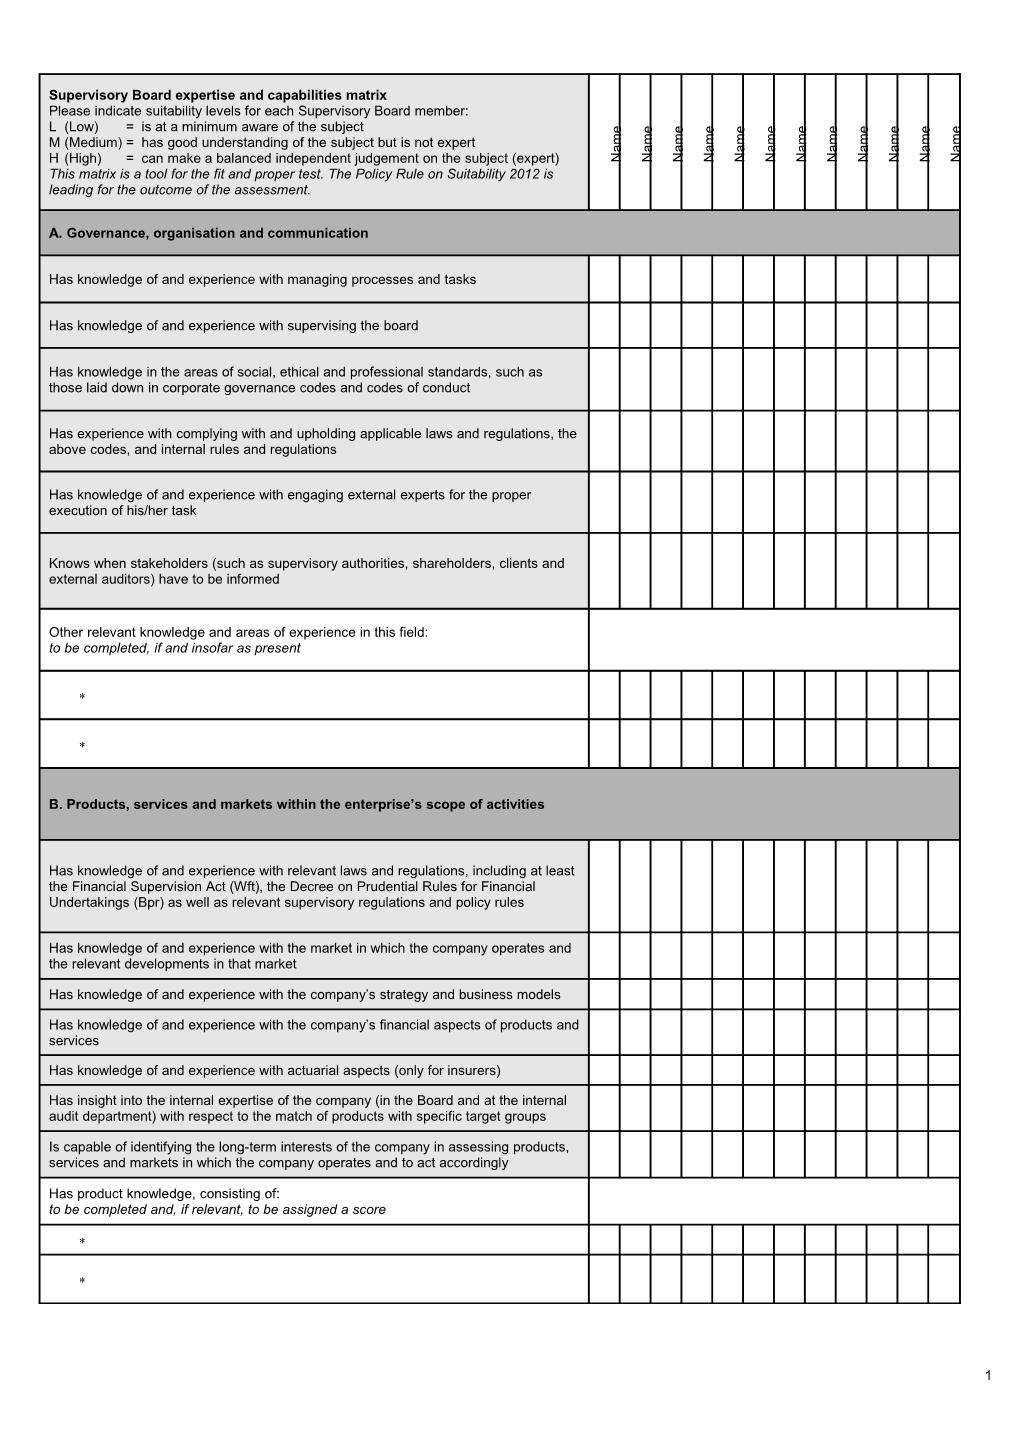 Supervisory Board Expertise and Capabilities Matrix